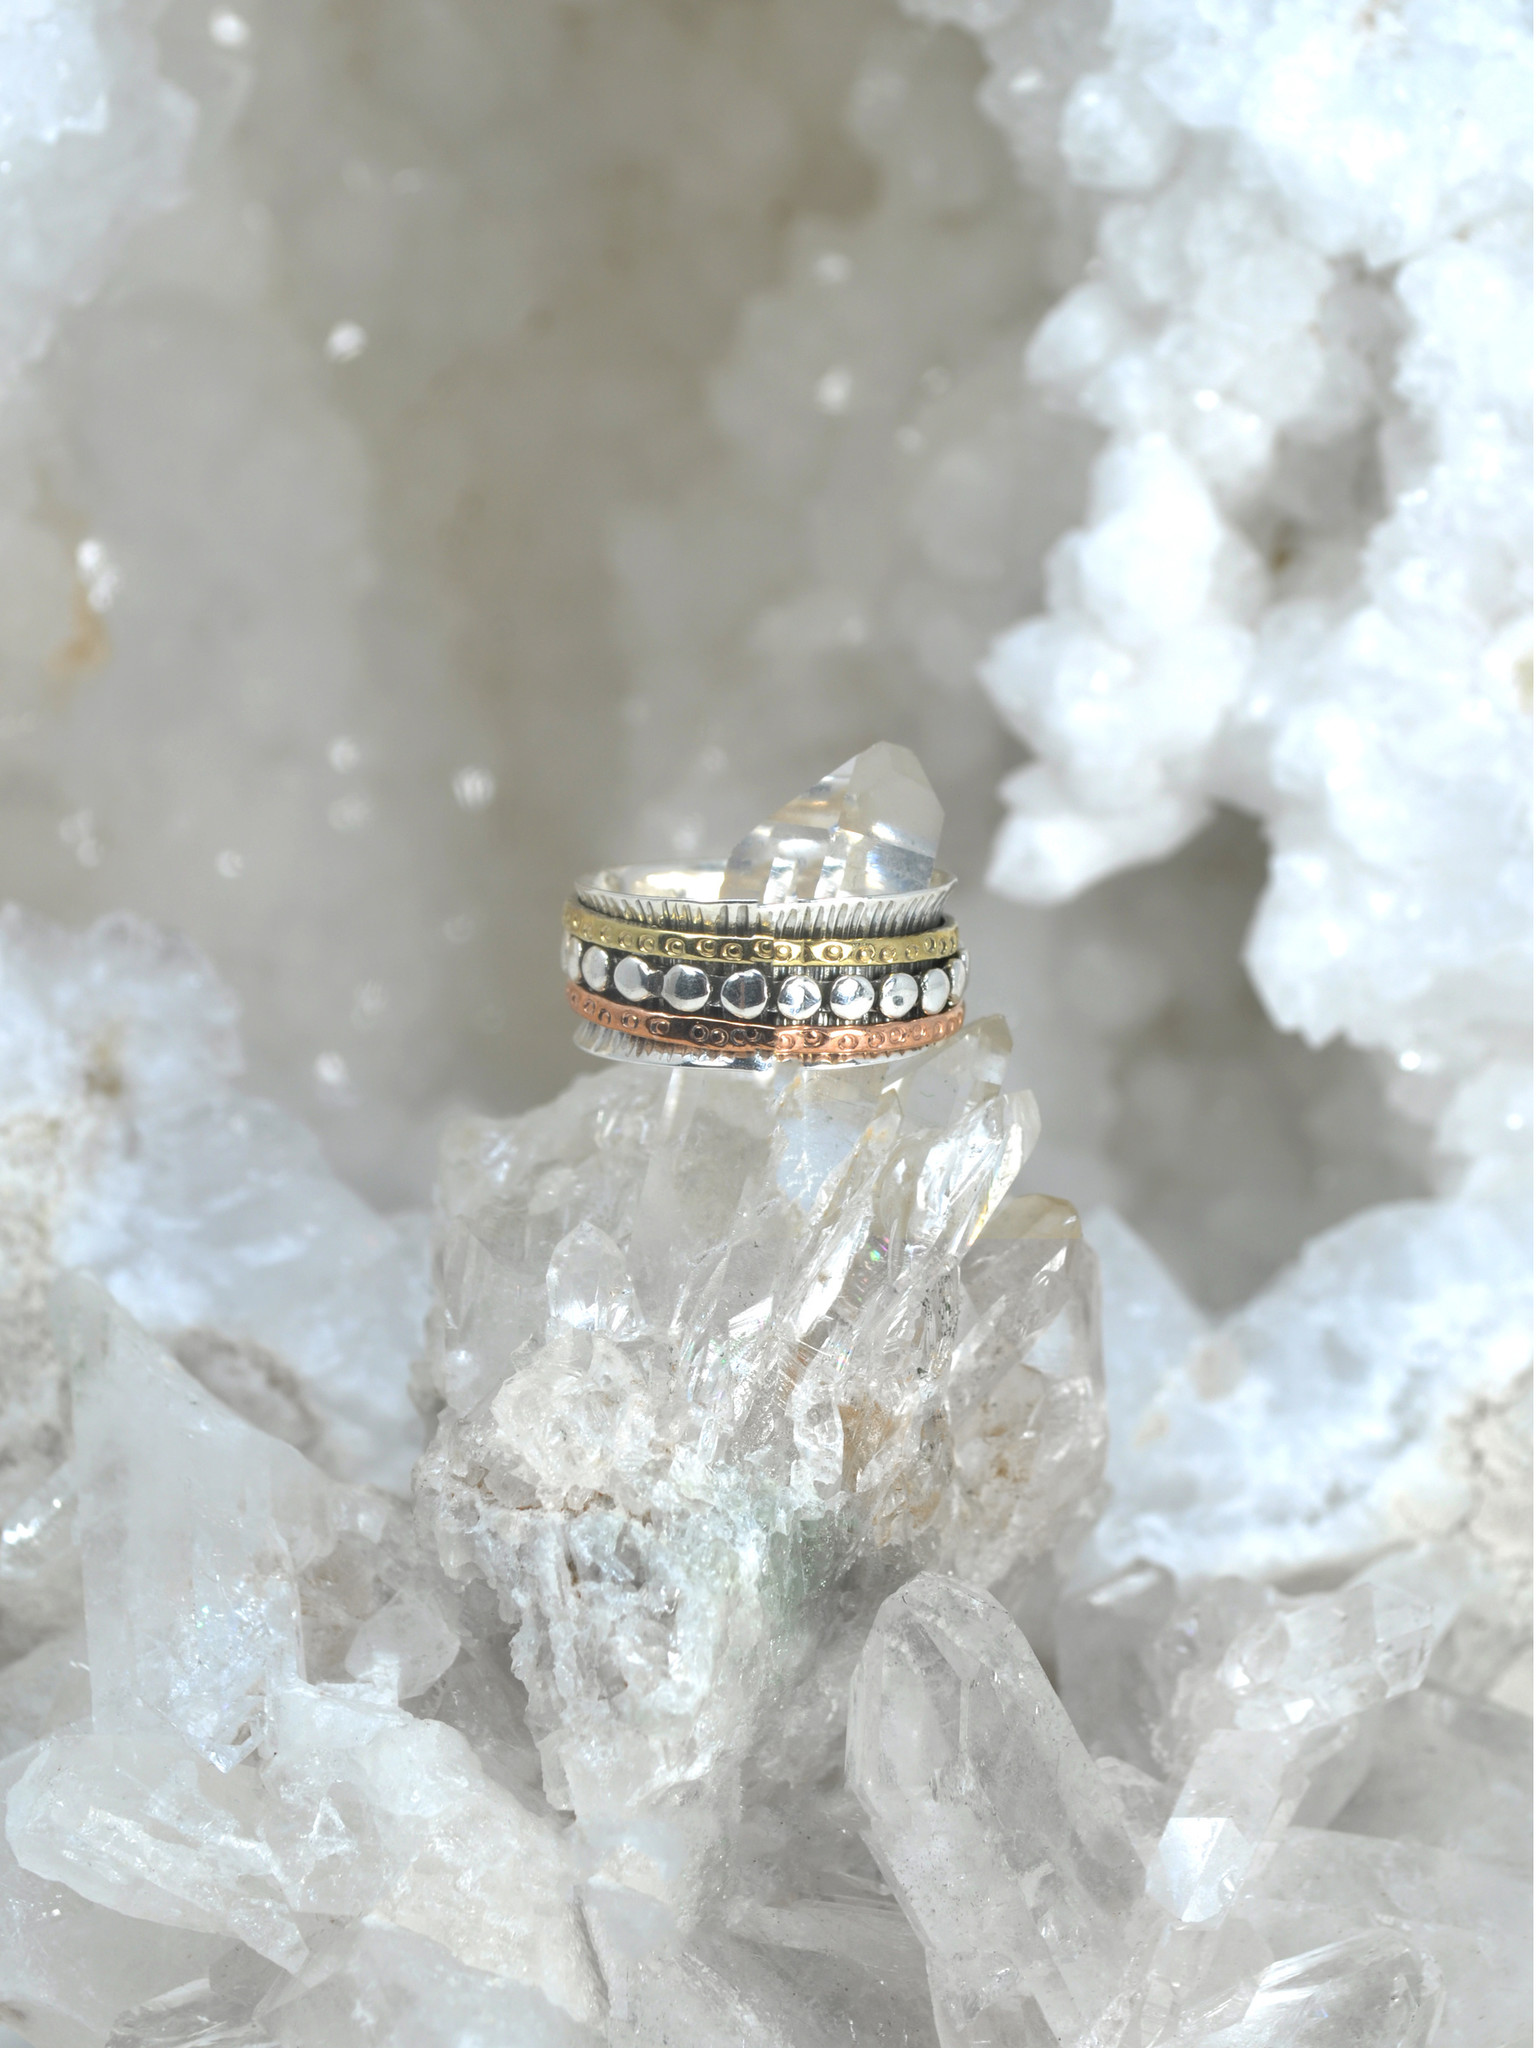 Details about   925 Sterling Silver Spinner Ring Fidget Spinner Ring For Christmas Gift 